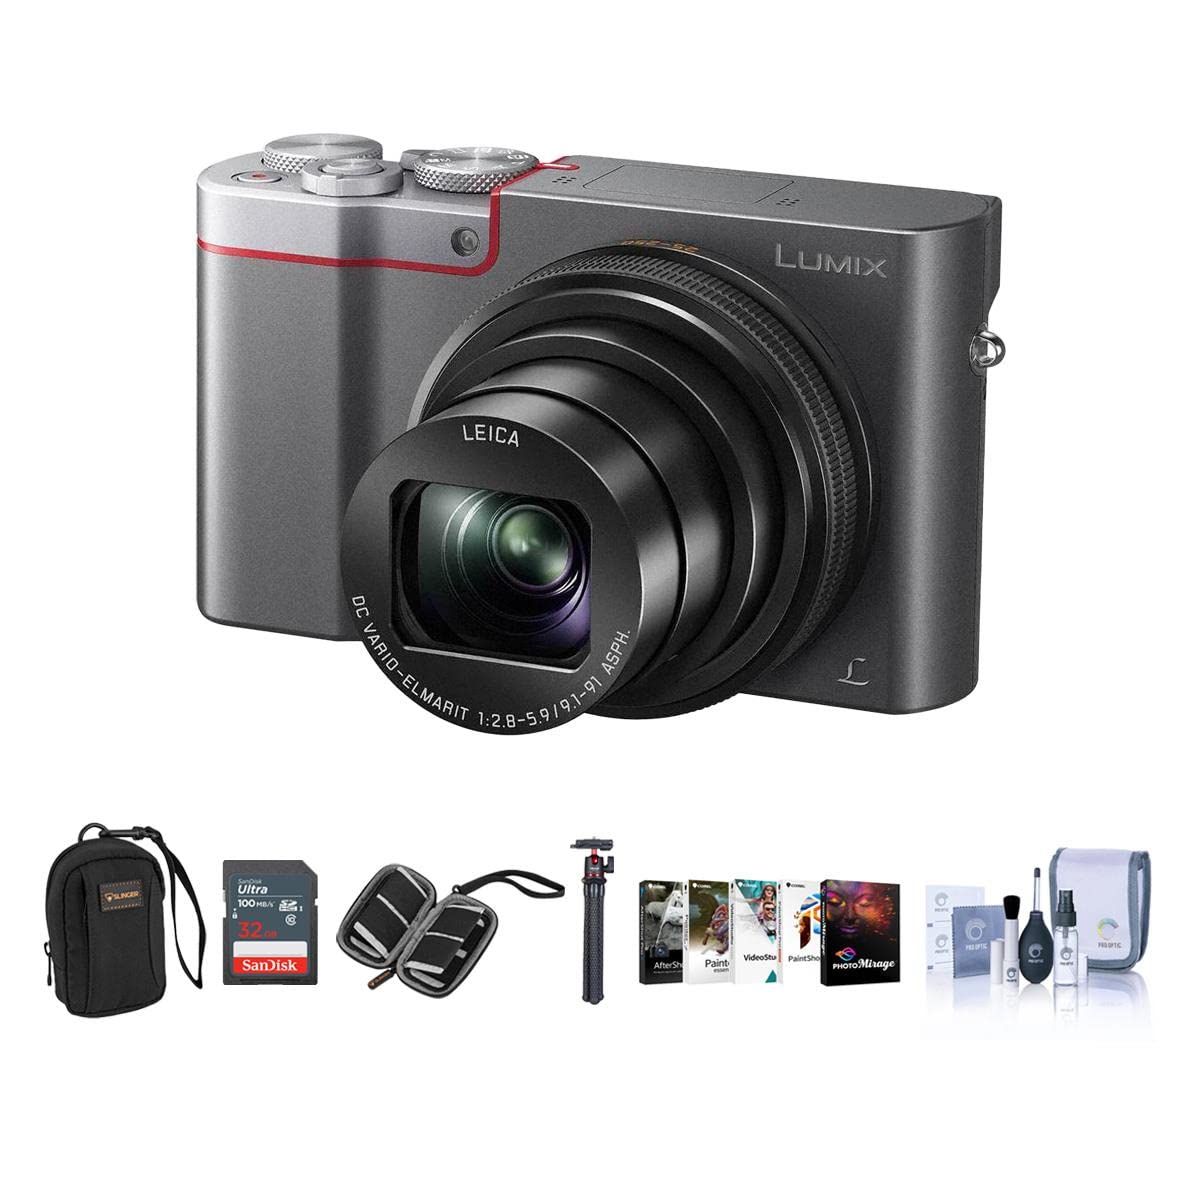 Panasonic LUMIX ZS100 4K Digital Camera, 20.1 Megapixel 1-Inch Sensor, 10X Zoom Leica Lens DMC-ZS100S (Silver), Bag, Tripod, 16GB SD Card + Case, Corel PC Software Kit, Cleaning Kit